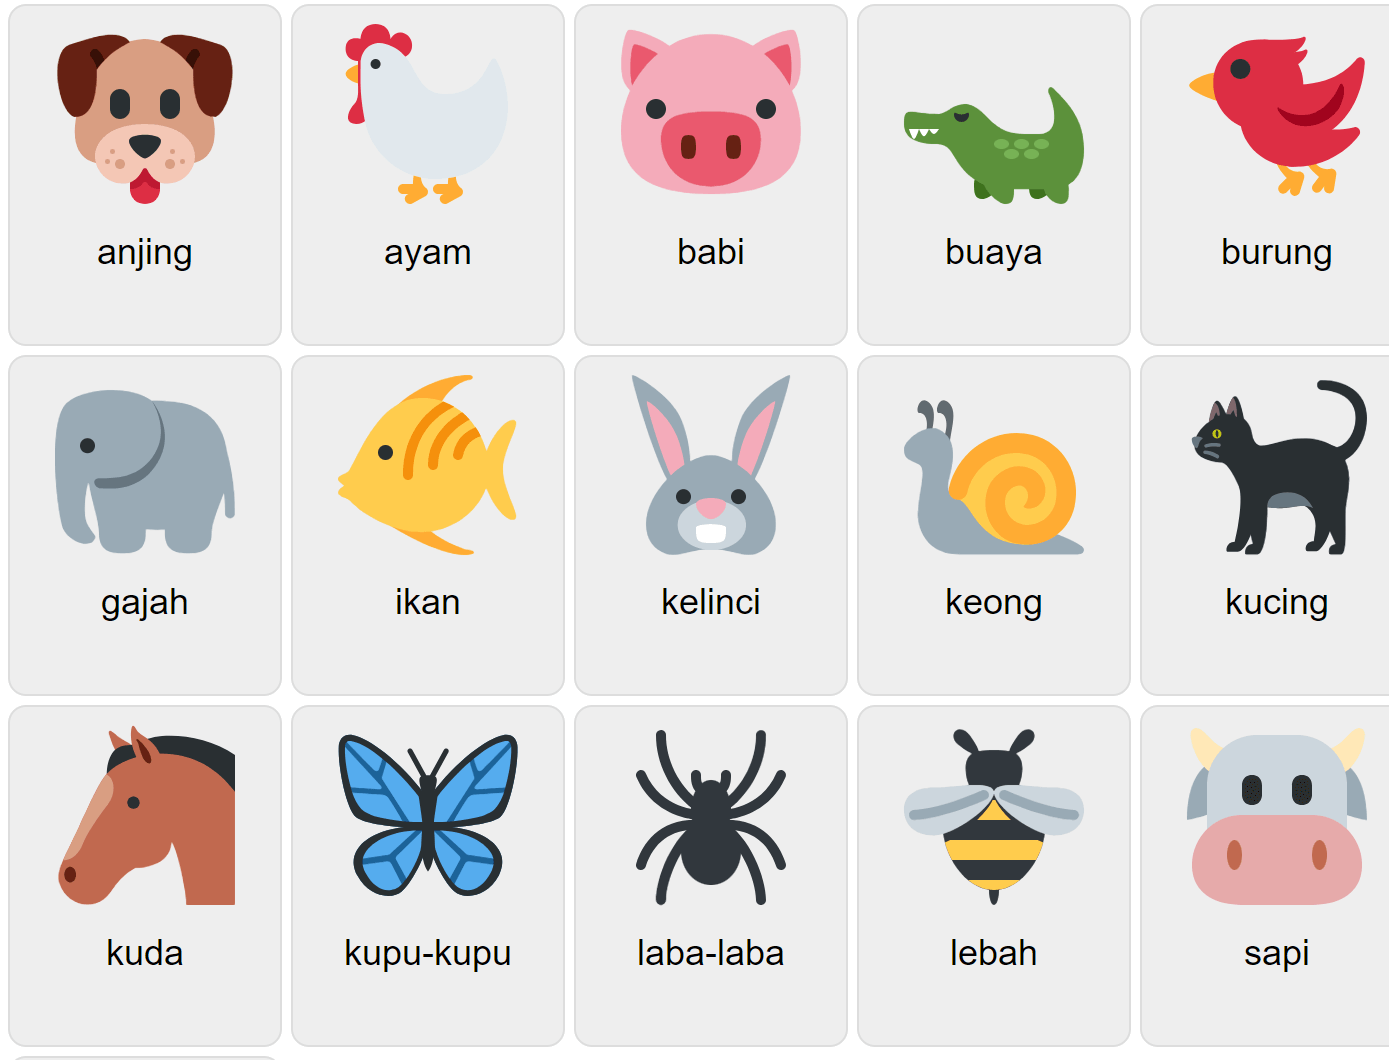 Animals in Indonesian